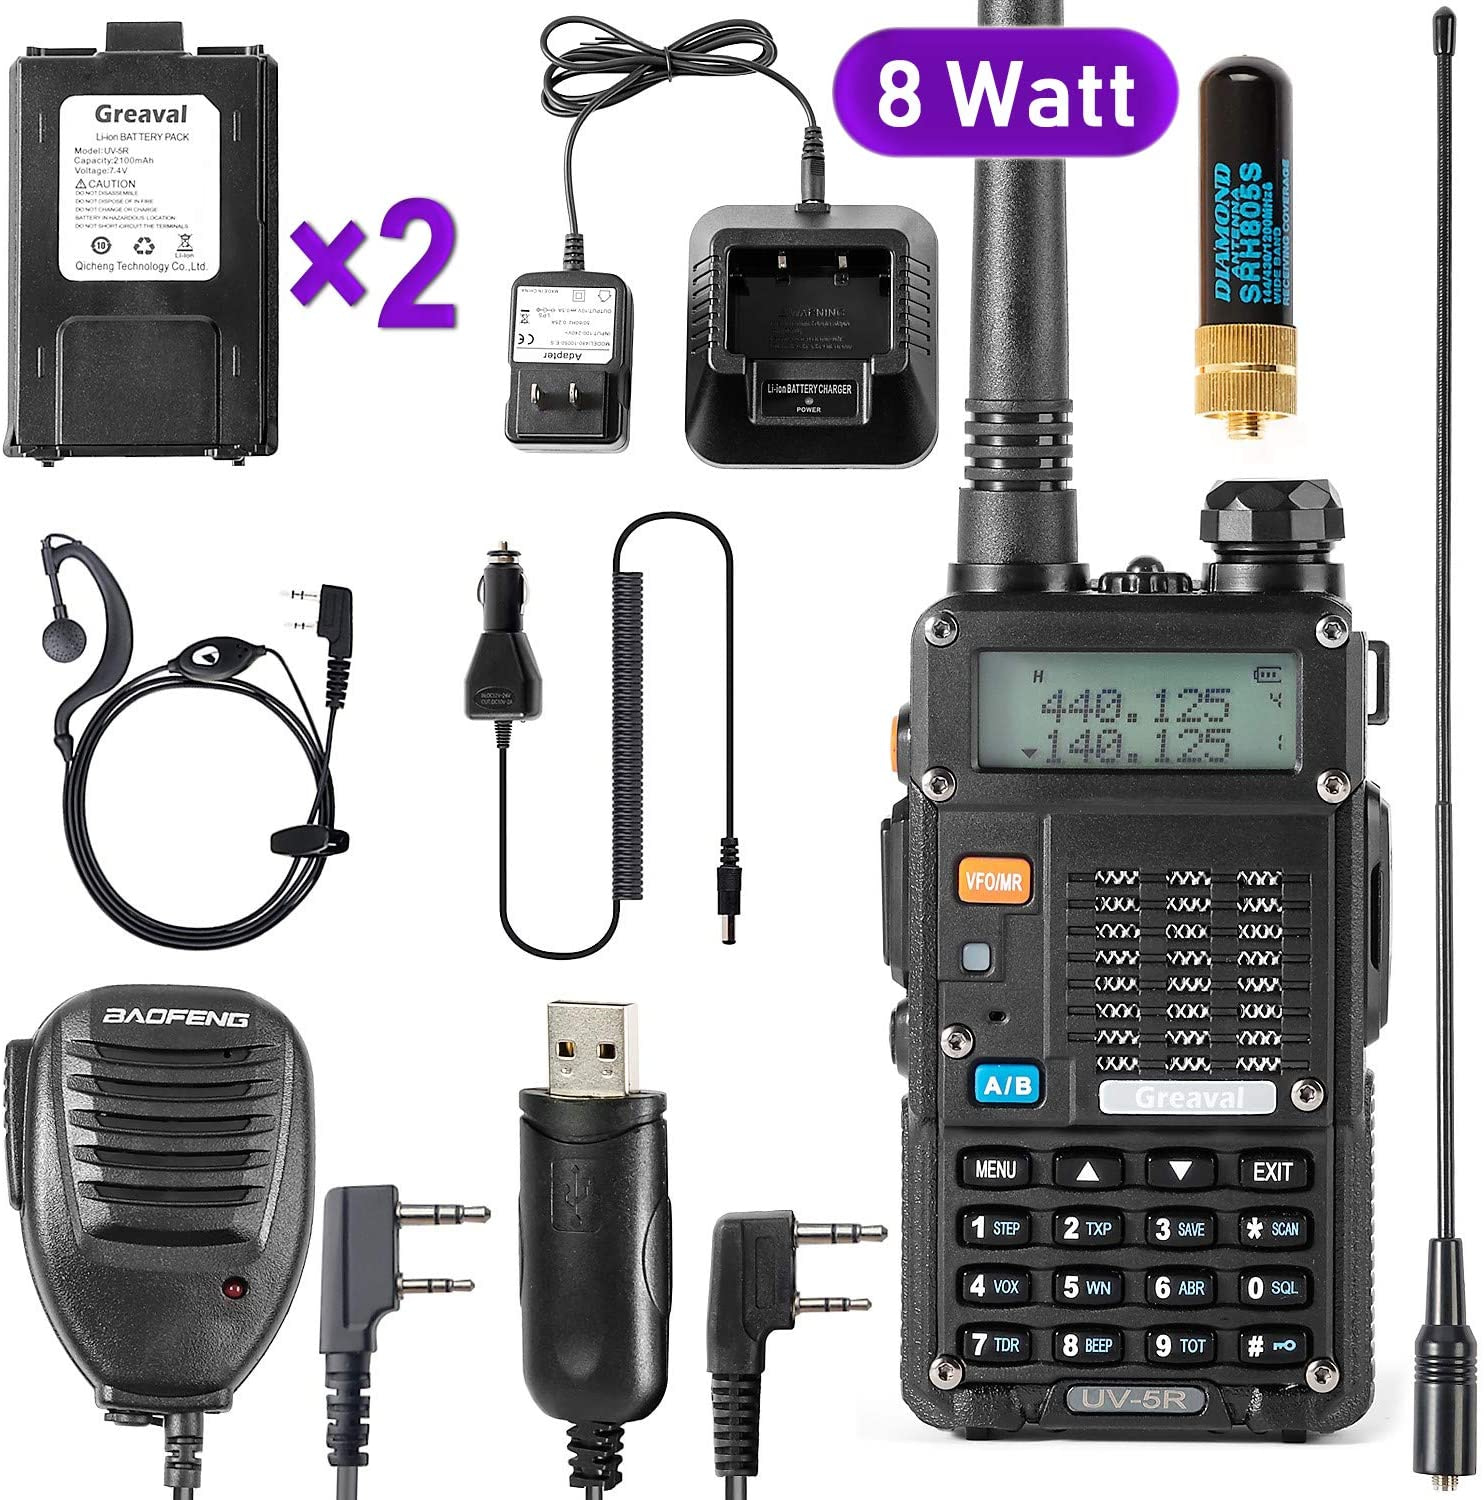  Ham Radio Walkie Talkie (UV-5R 8-Watt) UHF VHF Dual Band 2-Way Radio